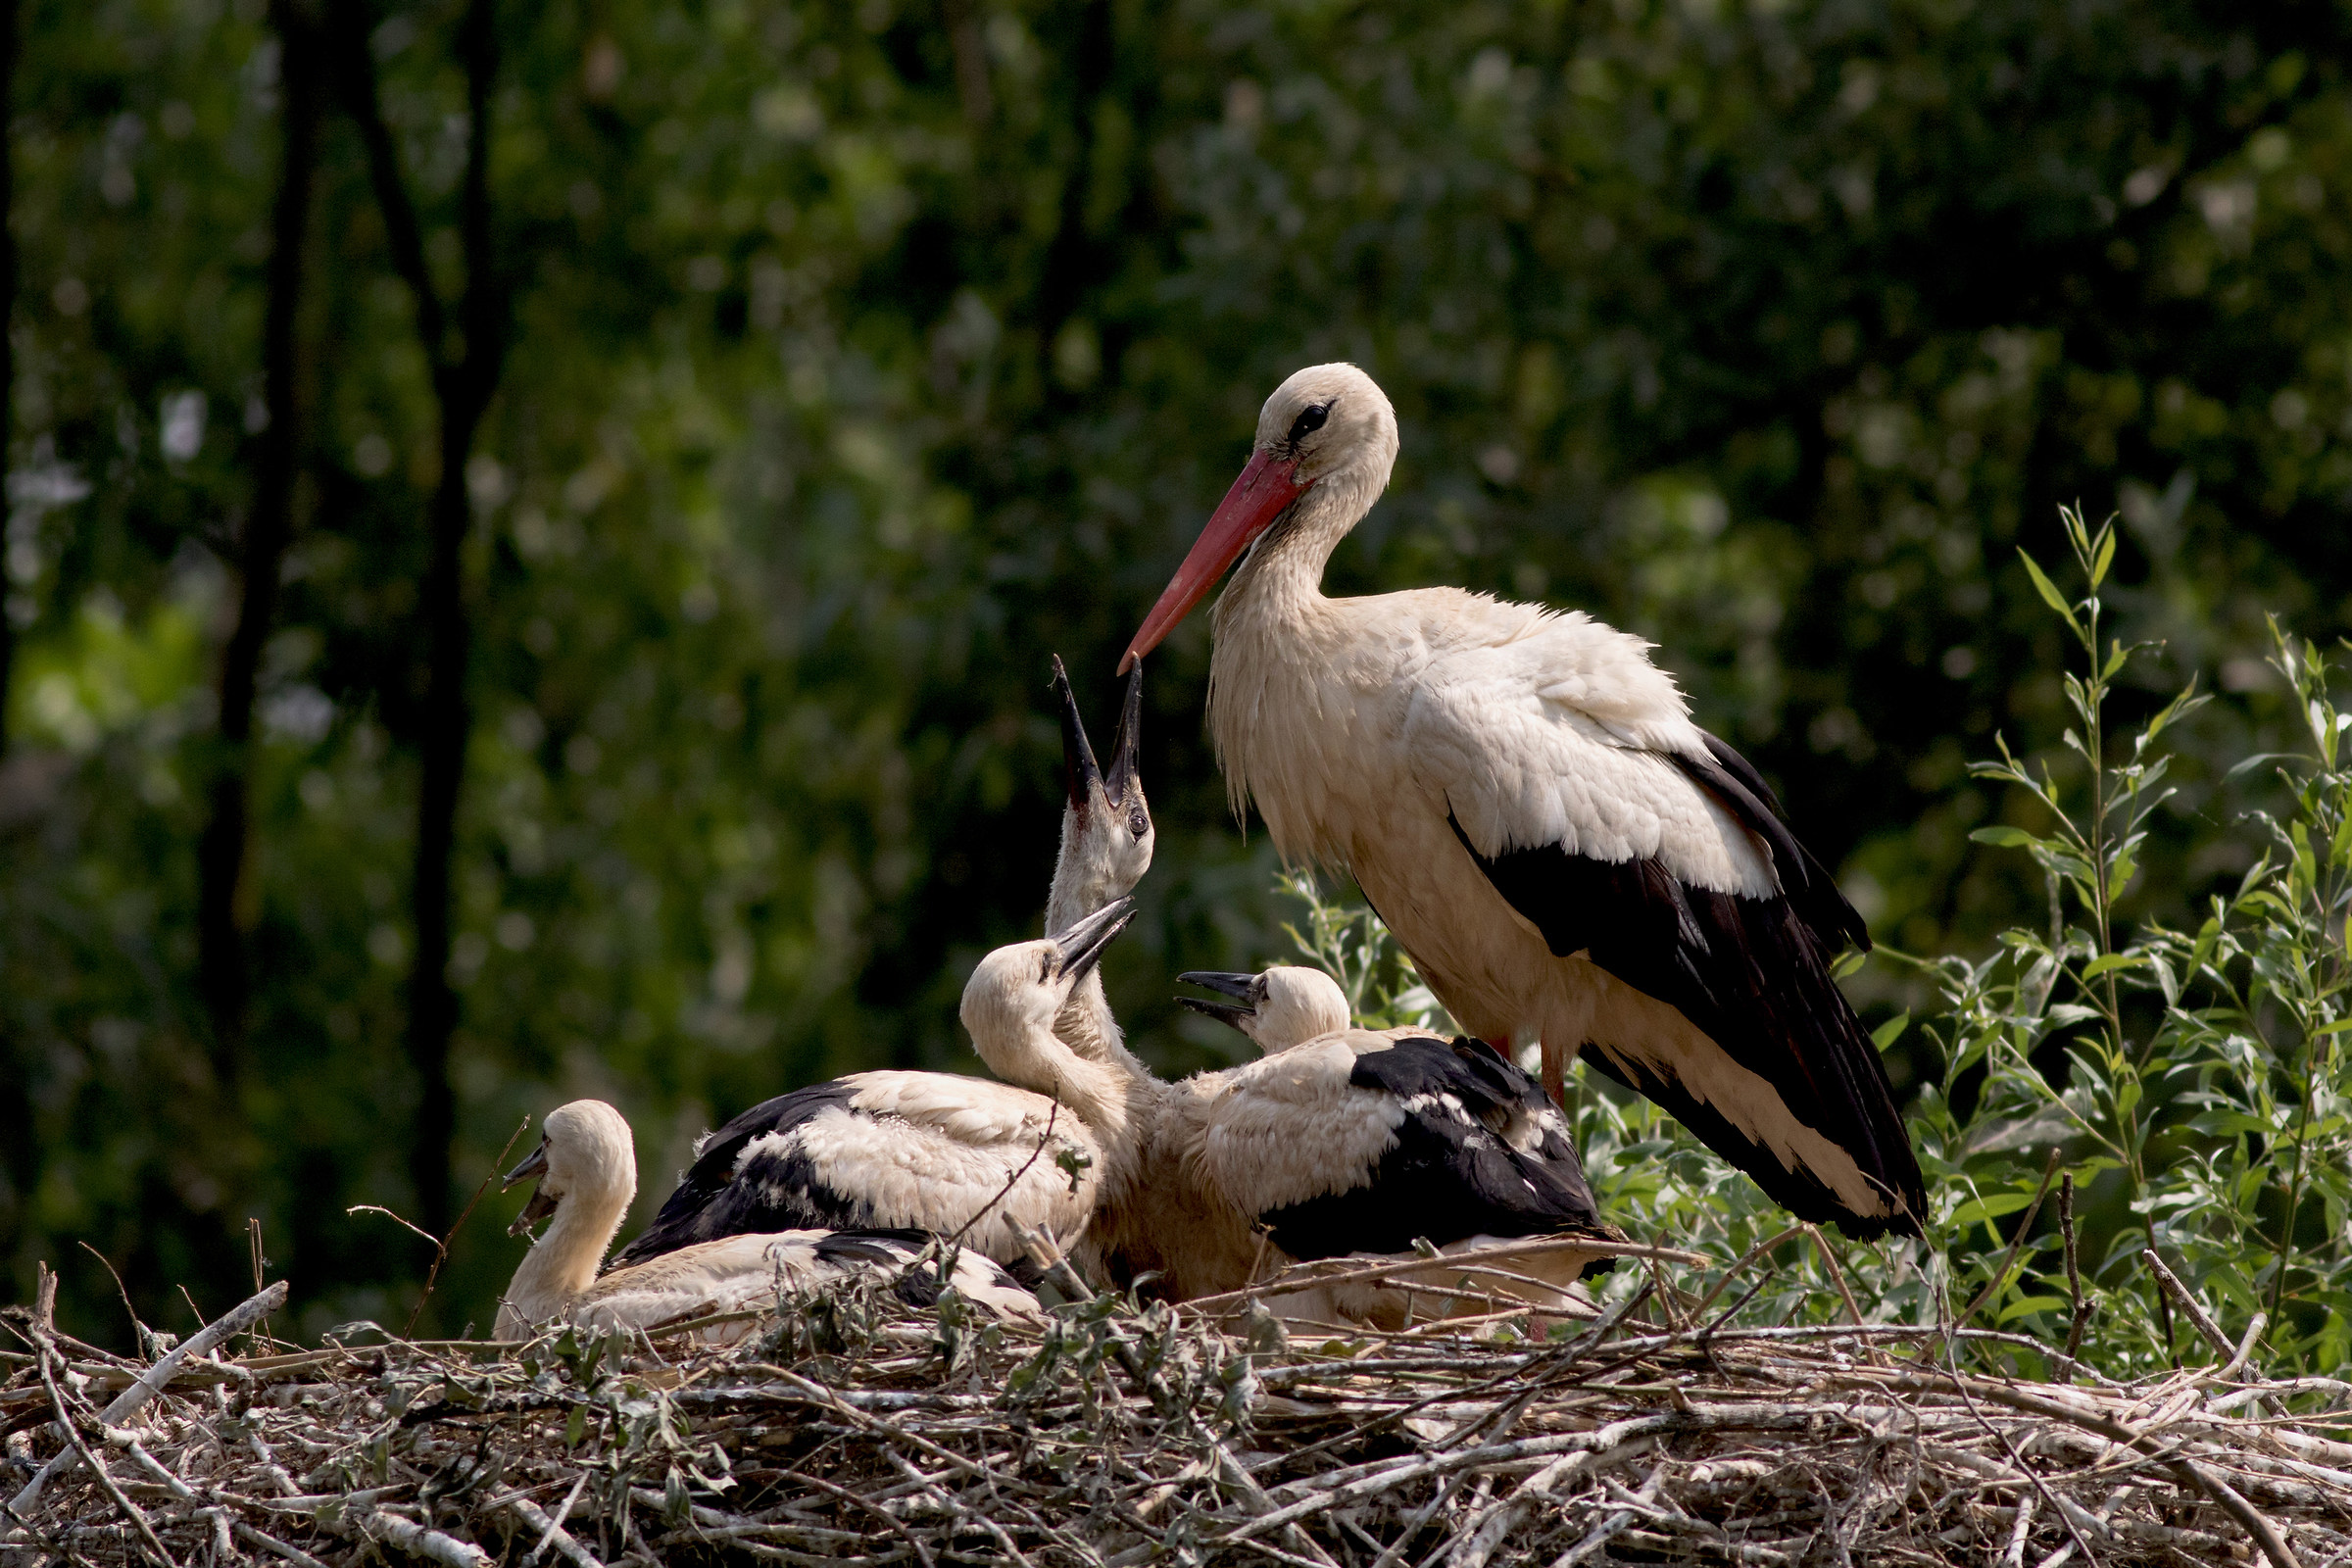 The new storks...